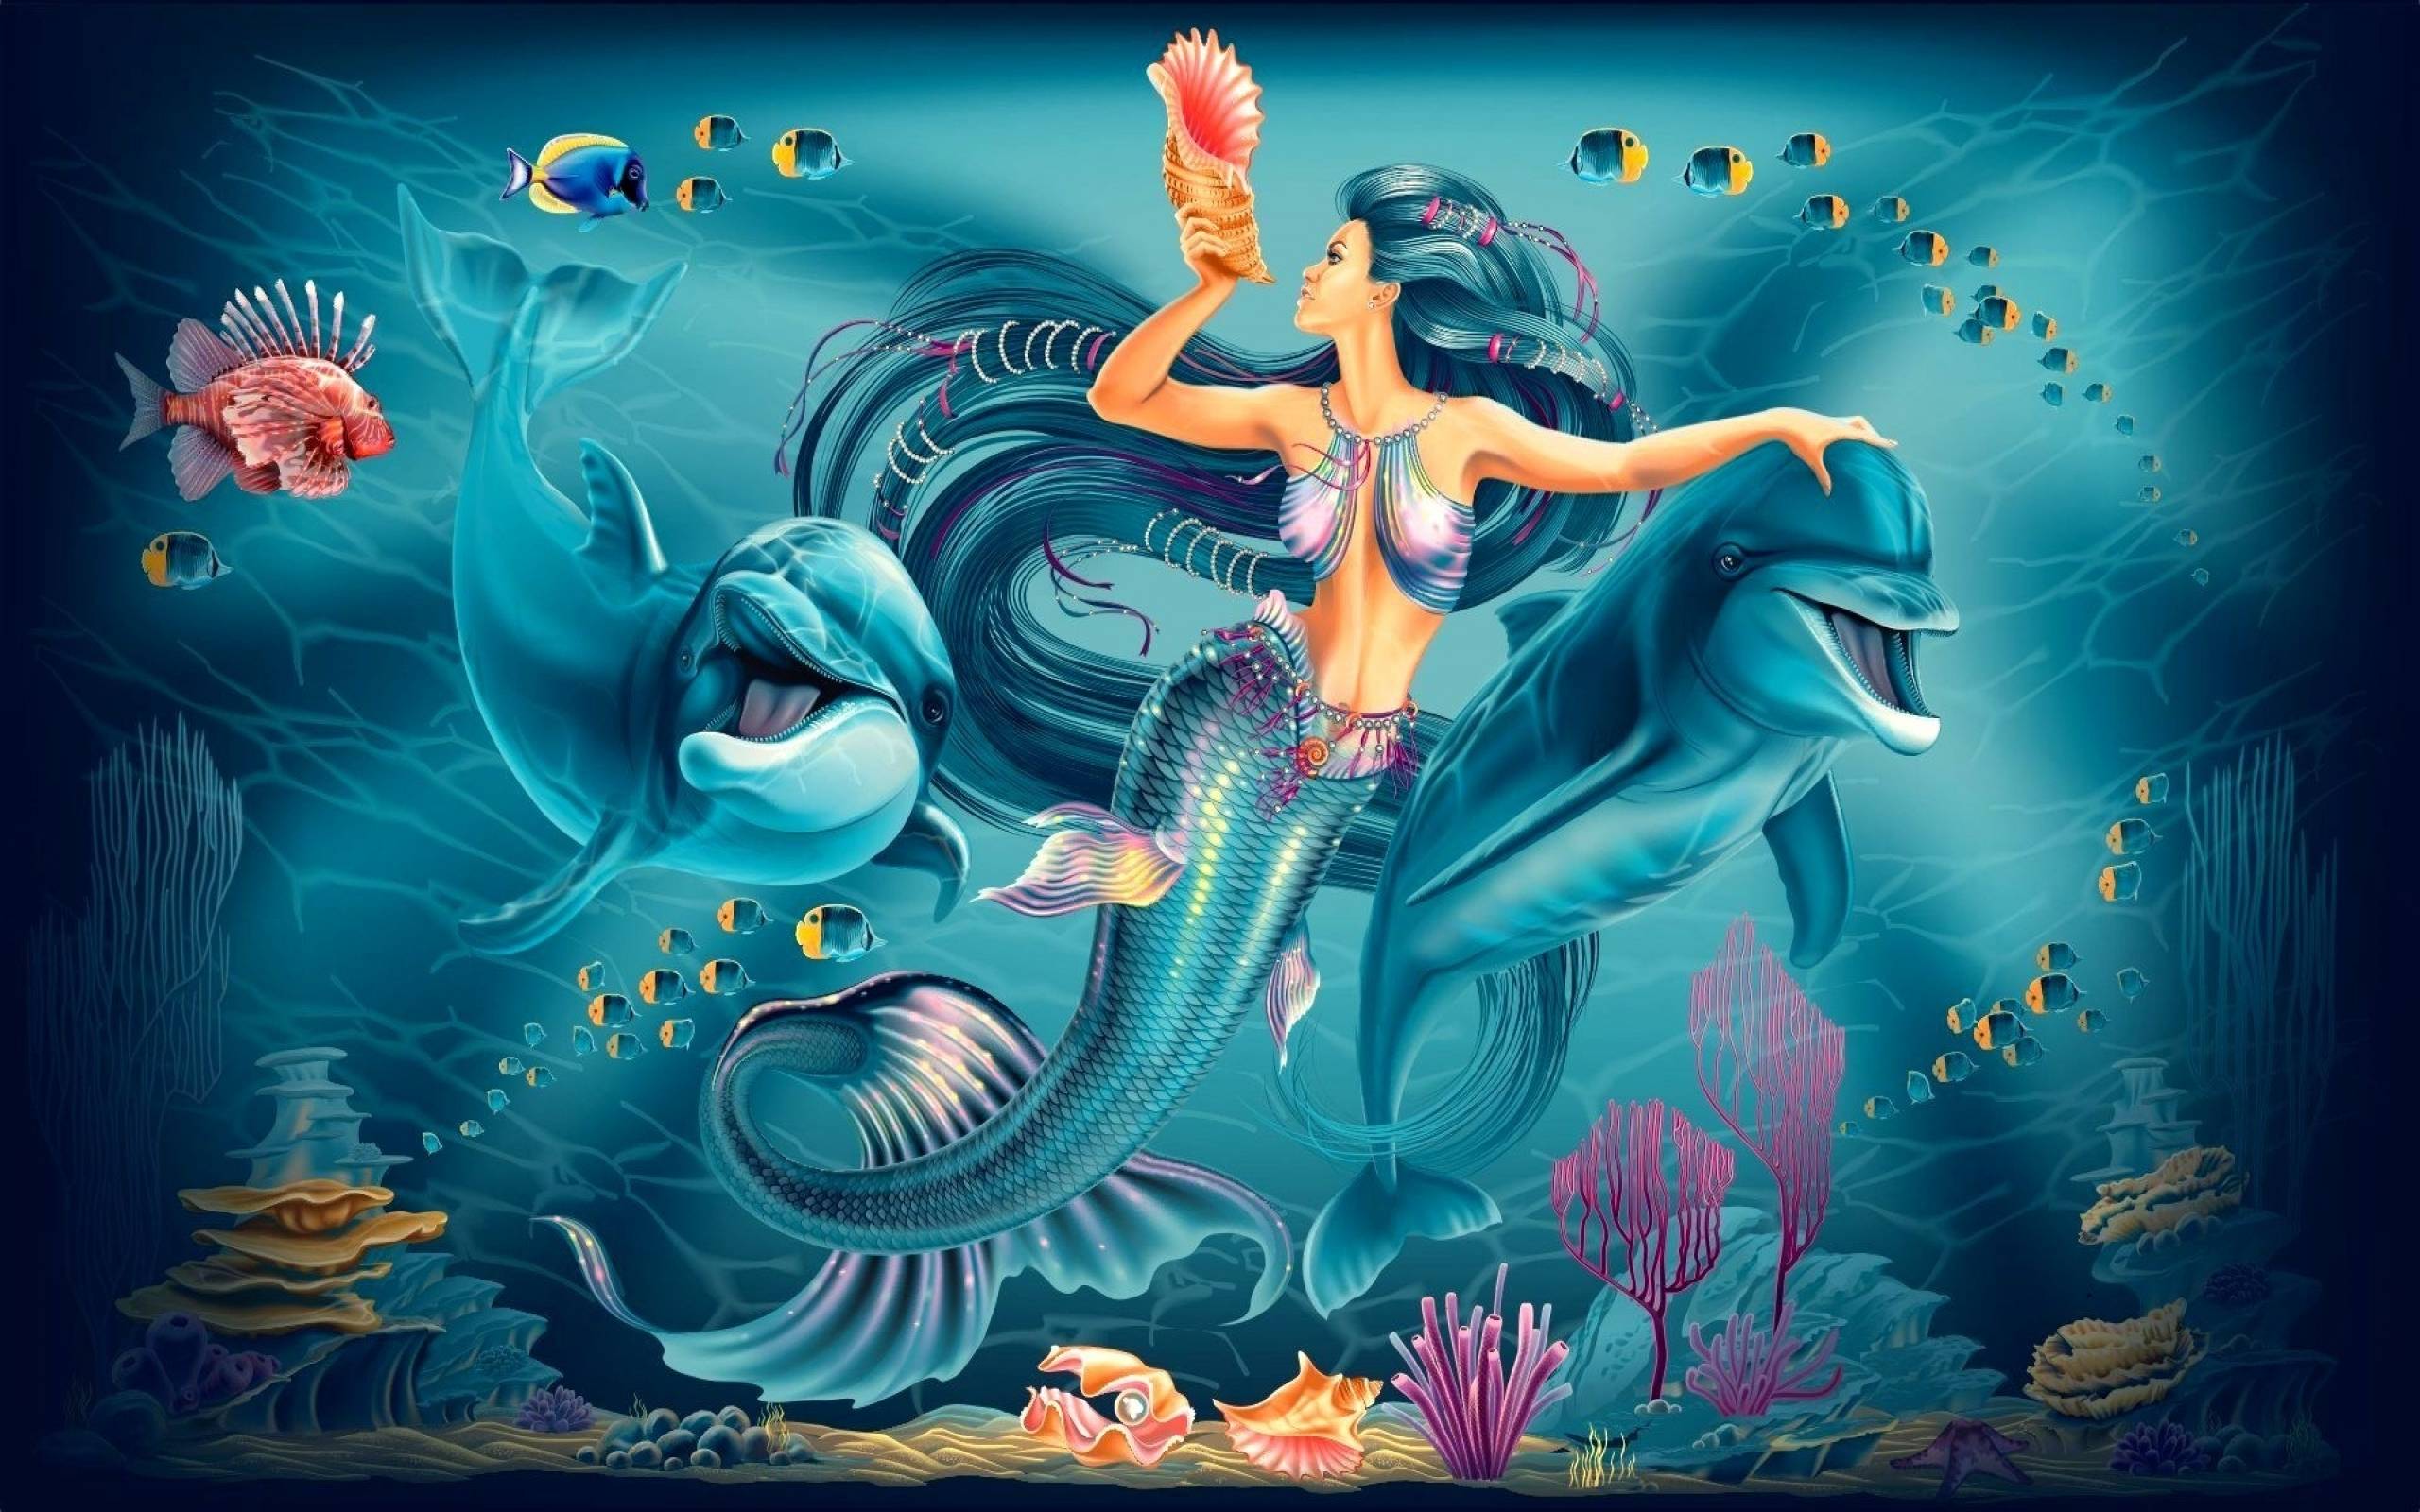 фэнтези русалка графика рисунок fantasy mermaid graphics figure без смс